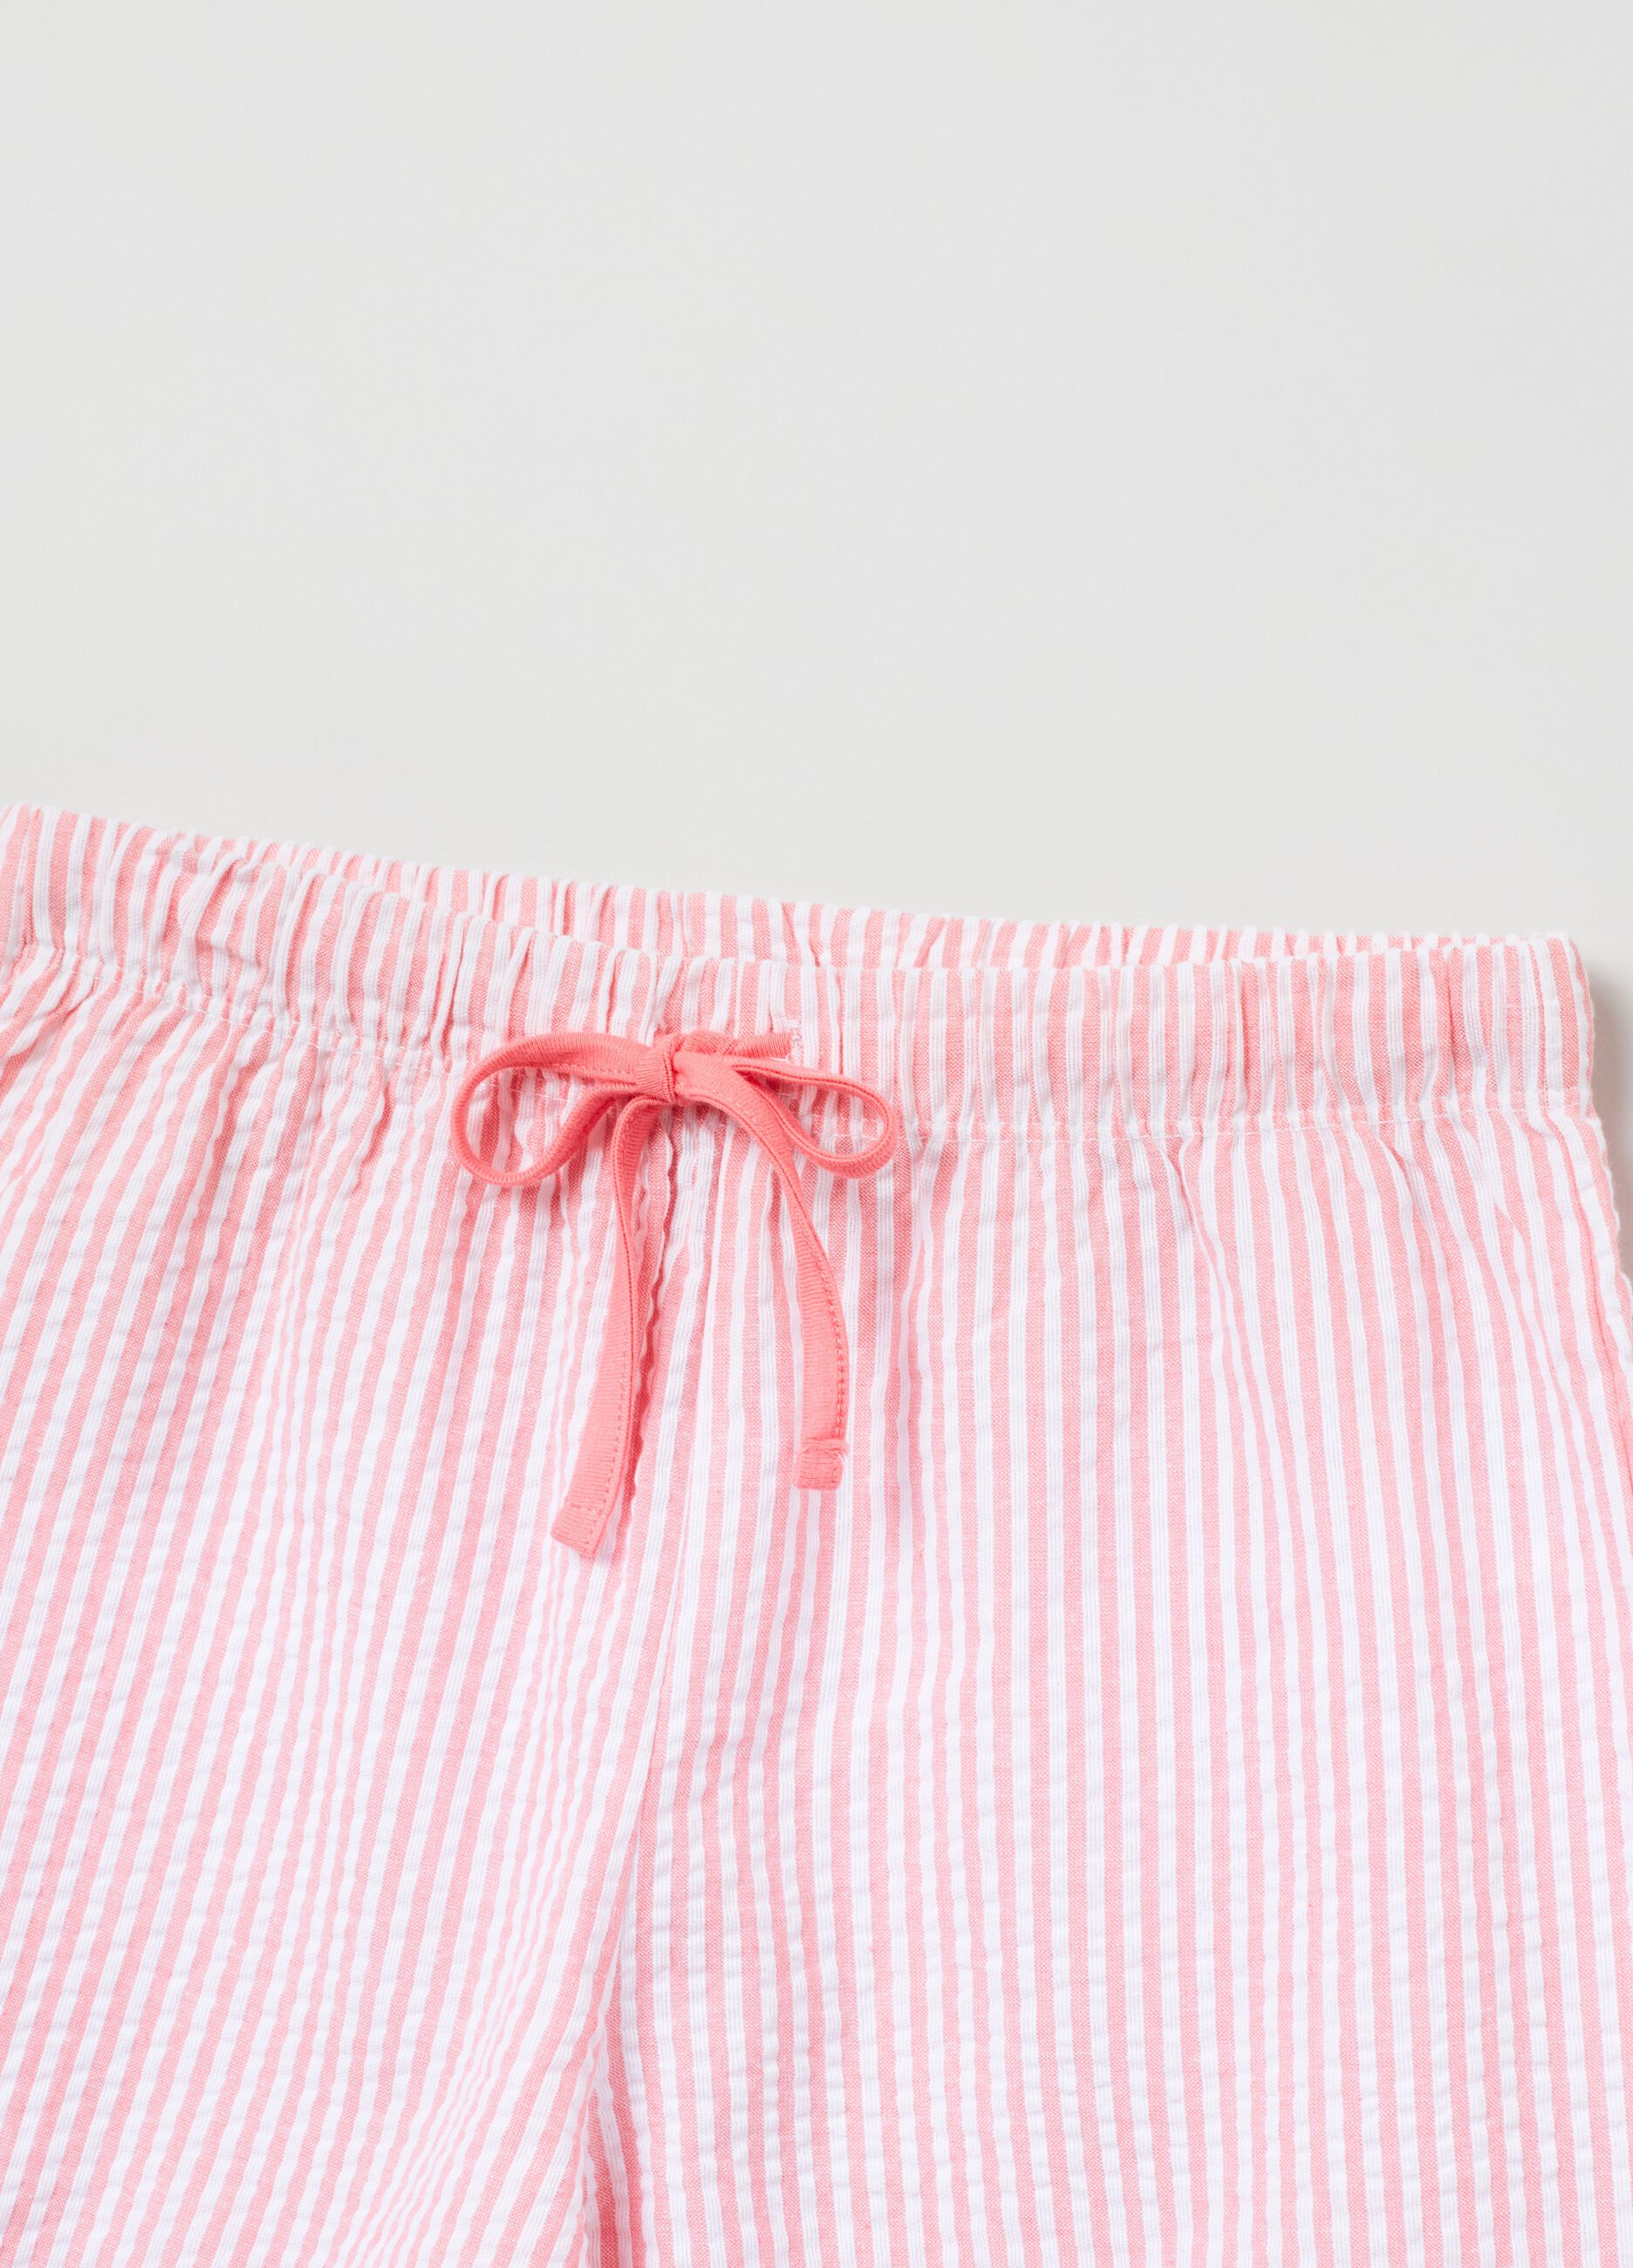 Pijama corto de algodón de rayas